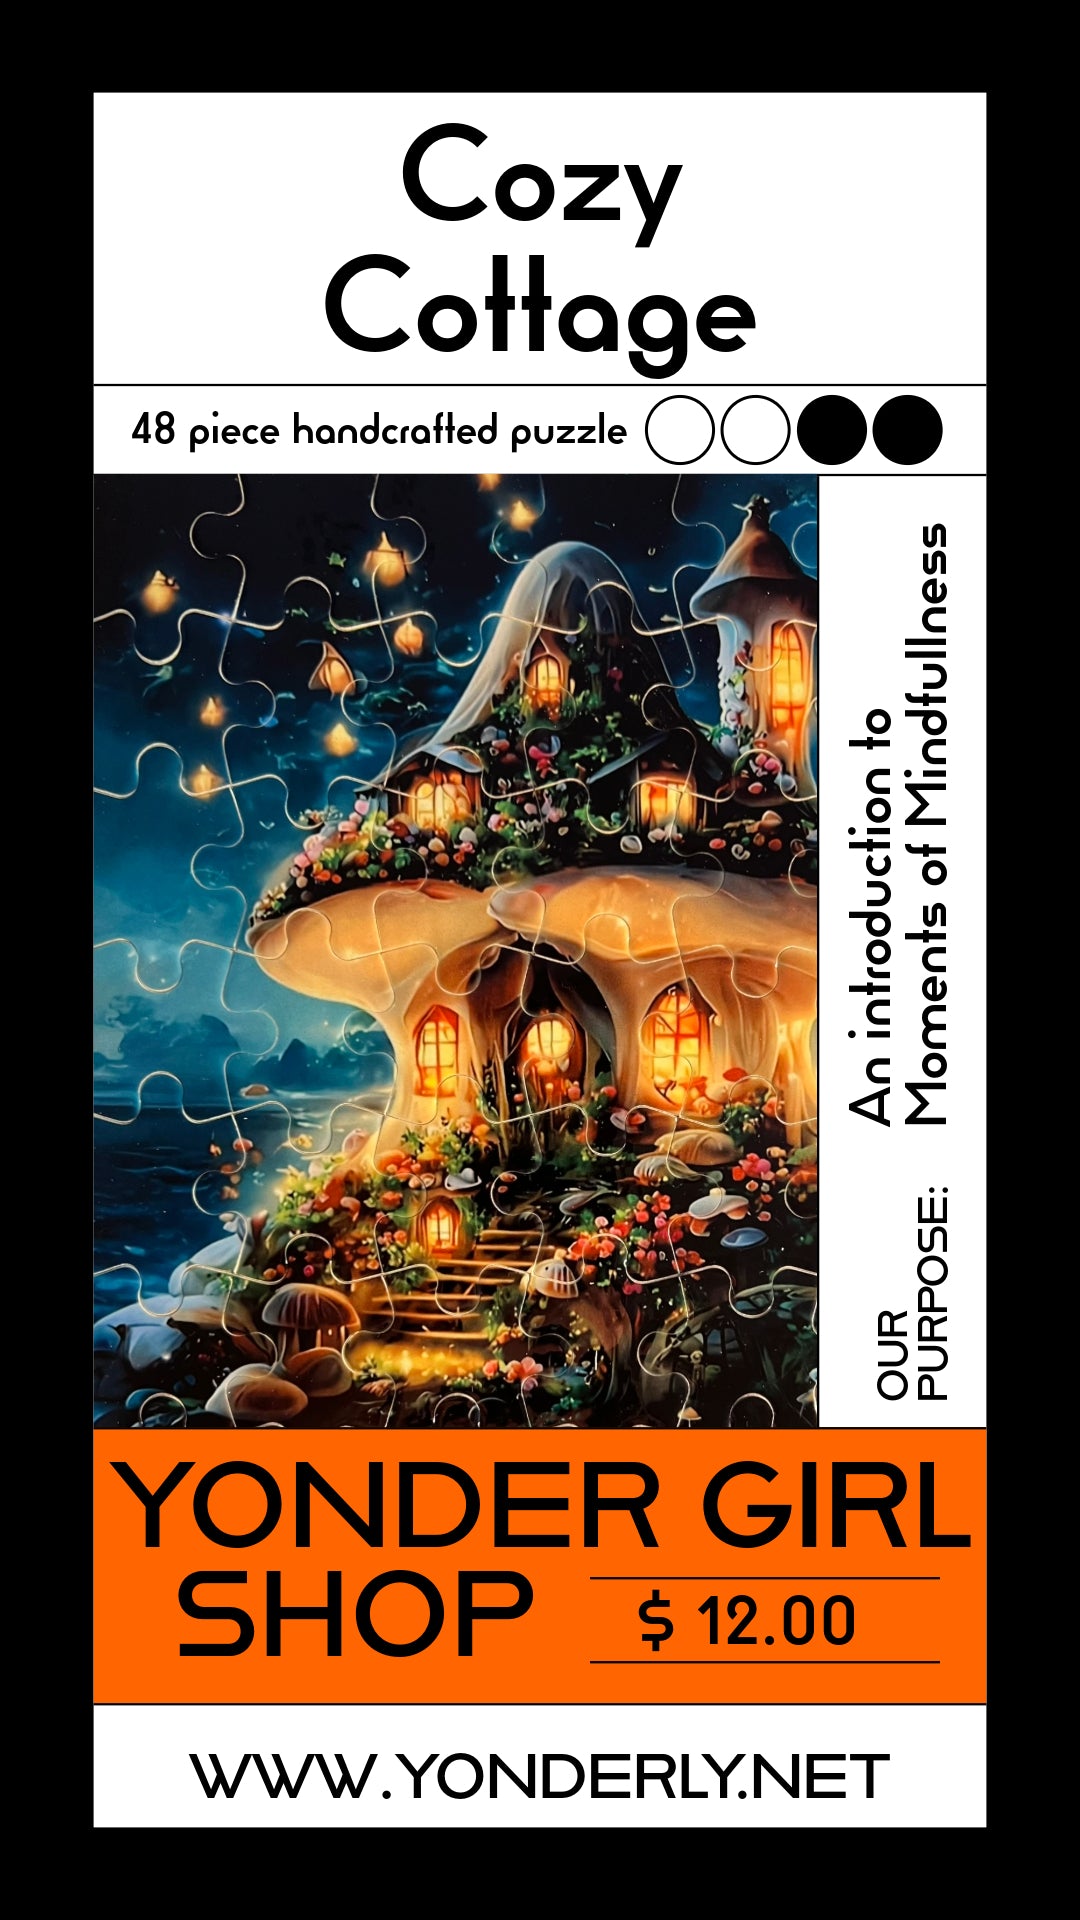 48 Piece A5 Handcrafted puzzle - "Cozy Cottage" fantasy puzzle